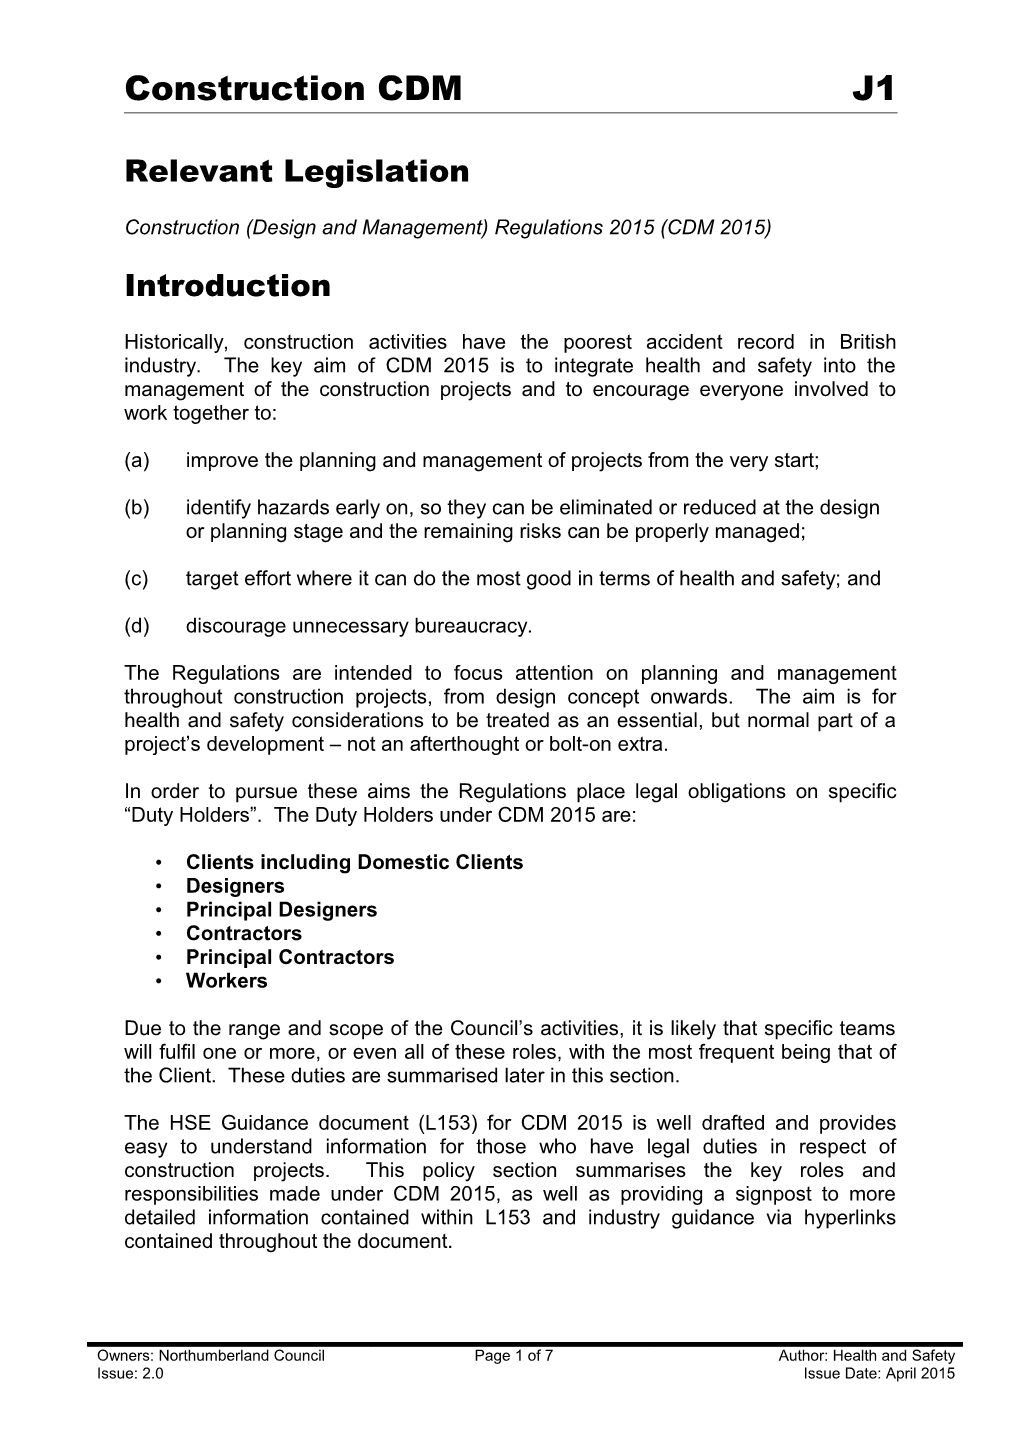 J01 - Construction, Design and Management Regulations (CDM) 2015 - April 2015